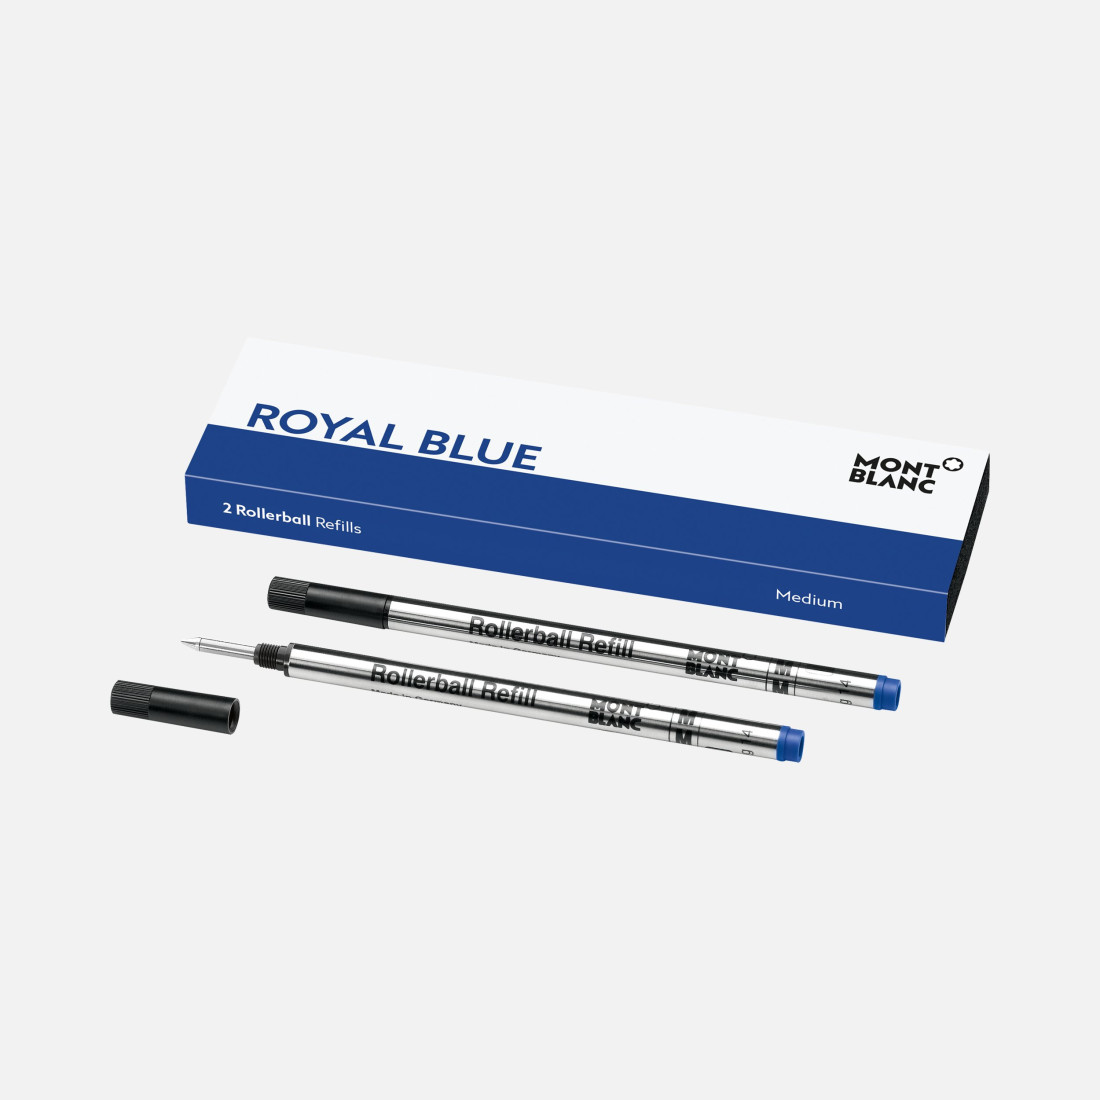 Montblanc 2 Rollerball Refills Medium, Royal Blue